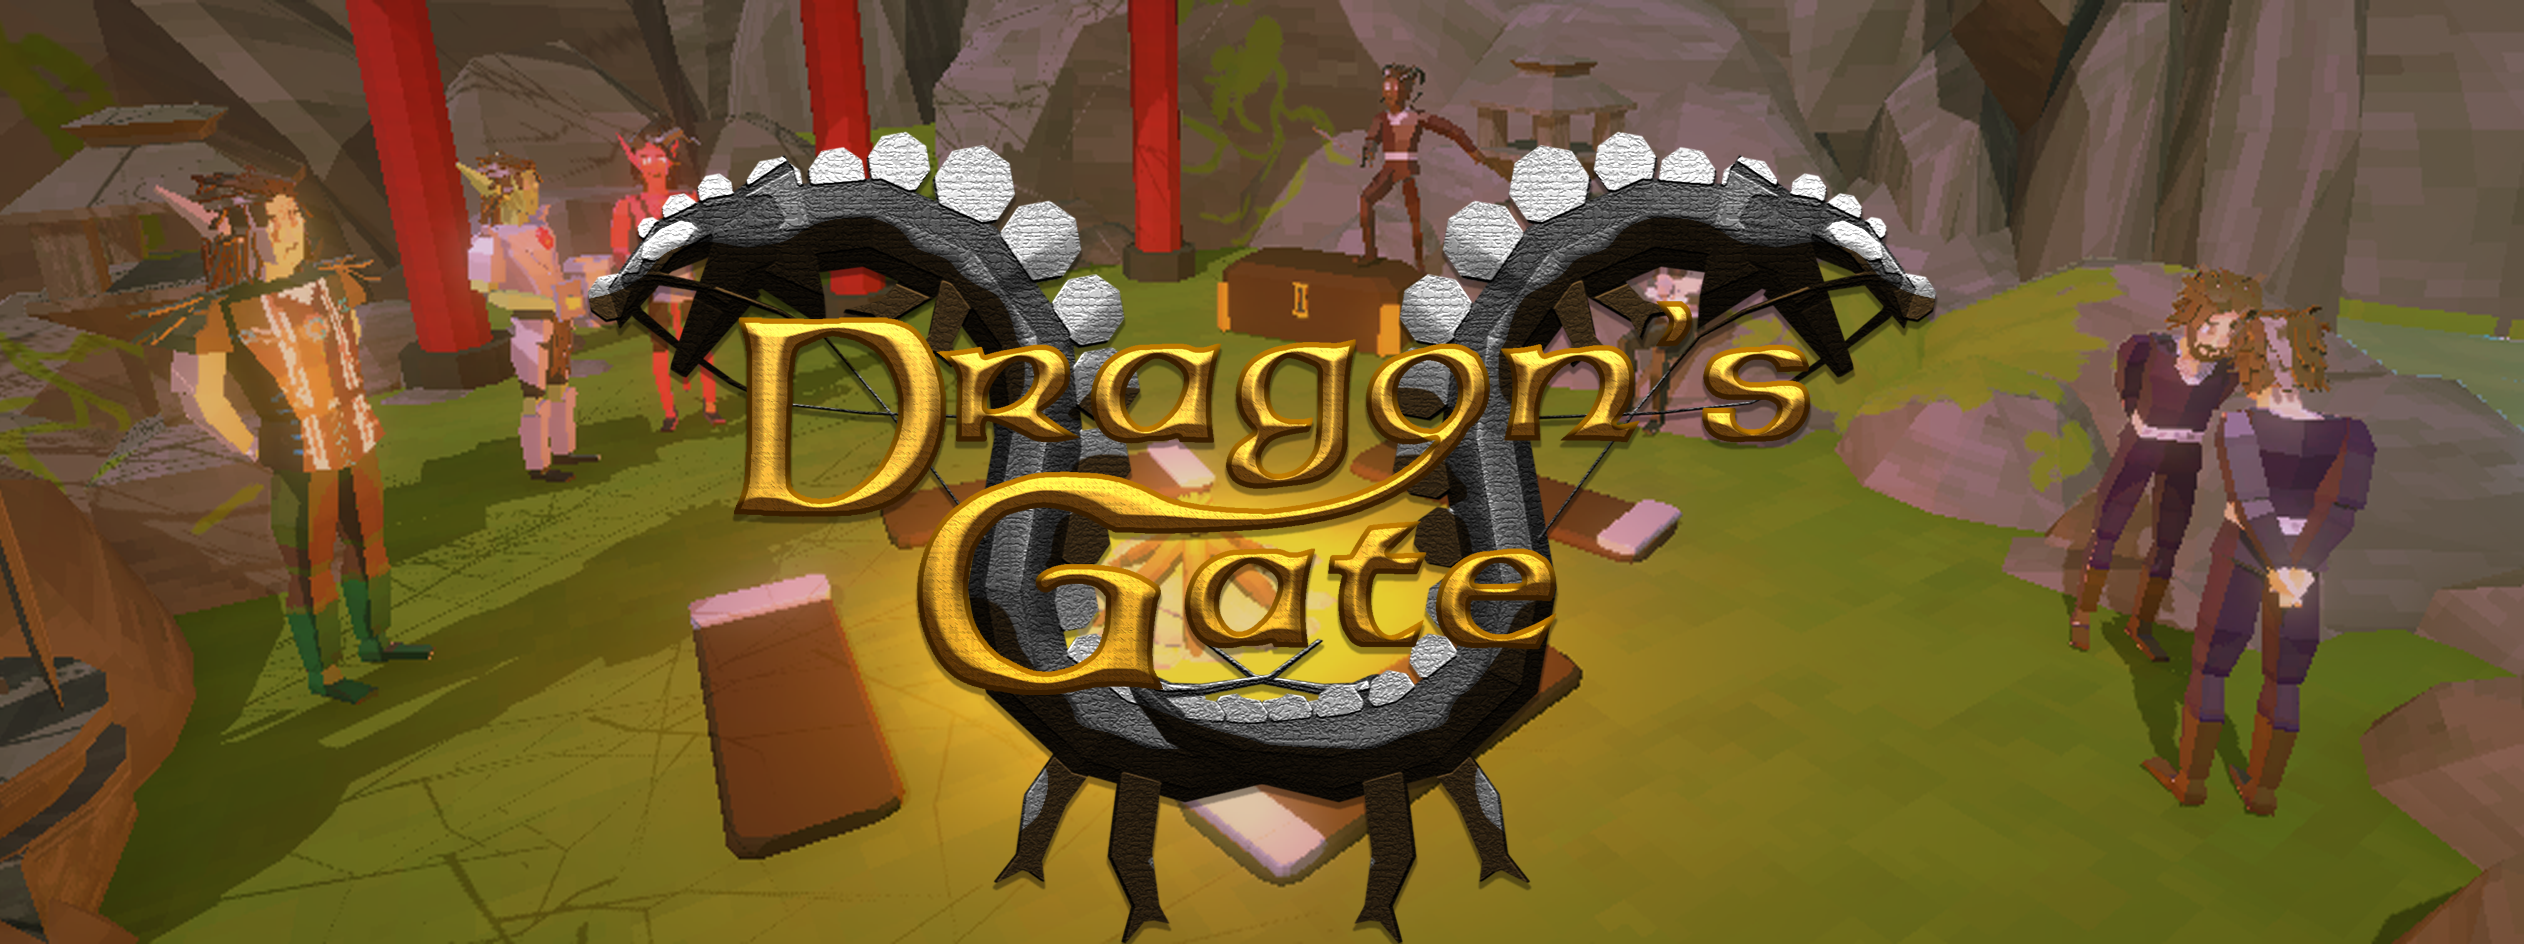 [Jam] Dragon's Gate